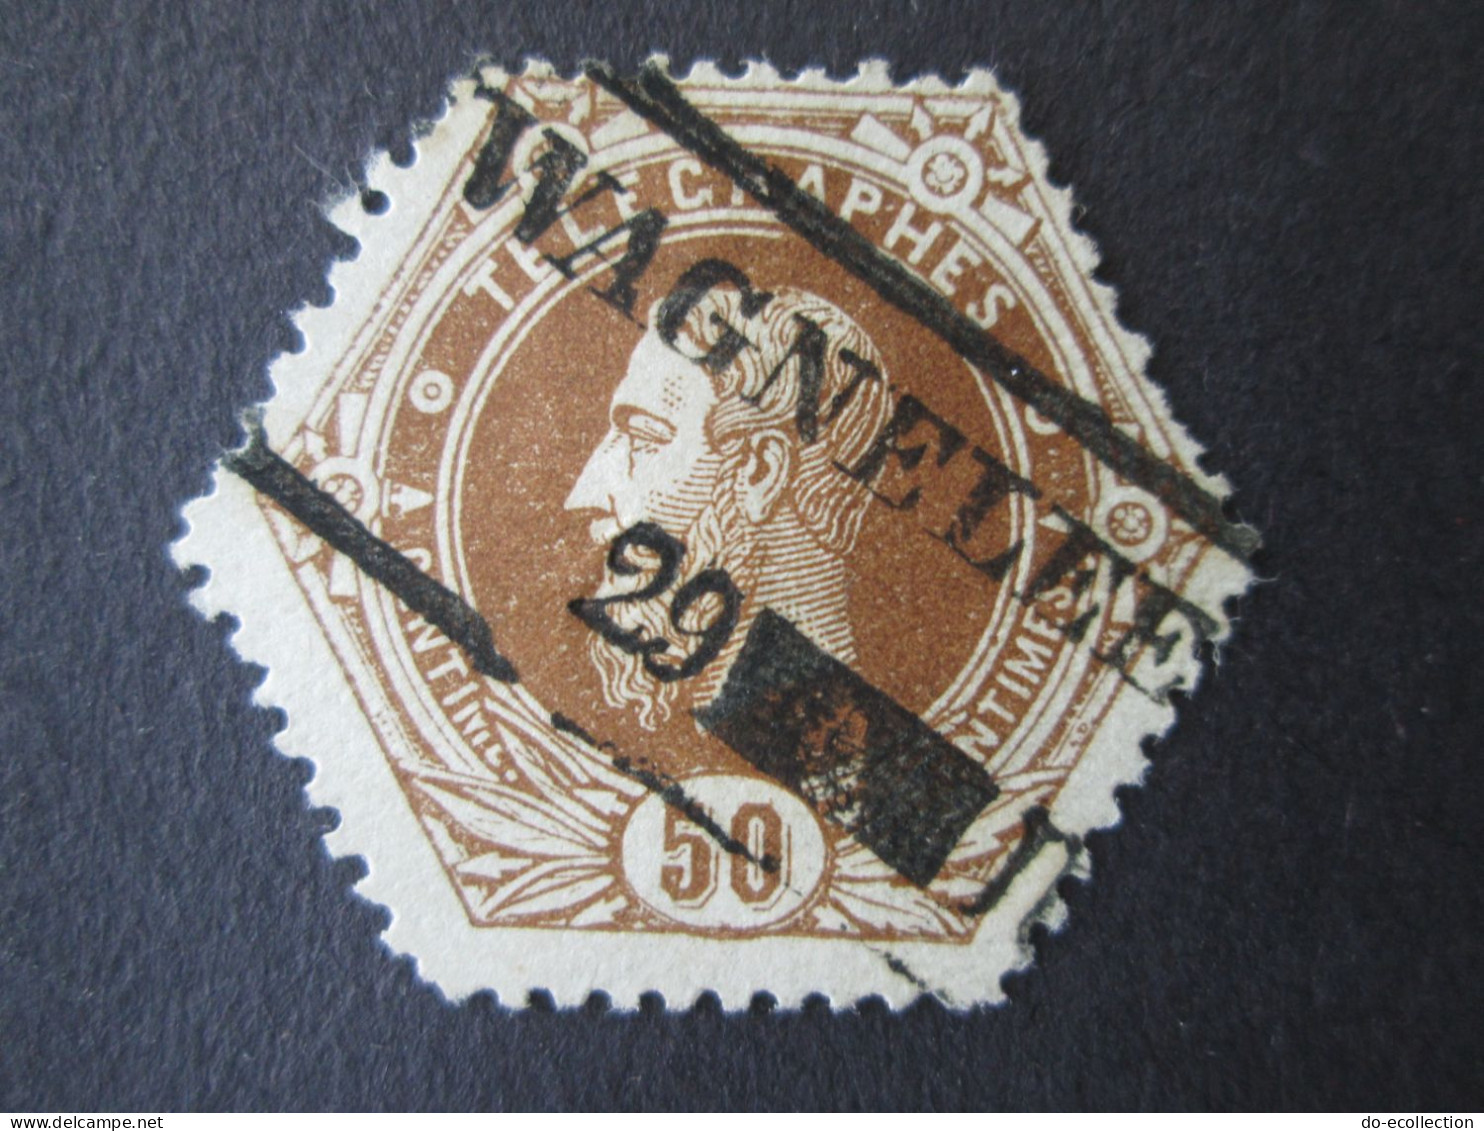 BELGIQUE Timbre Télégraphe 1871 50c WAGNELEE Leopold II Belgie Belgium Timbre Stamp - Telegraph [TG]